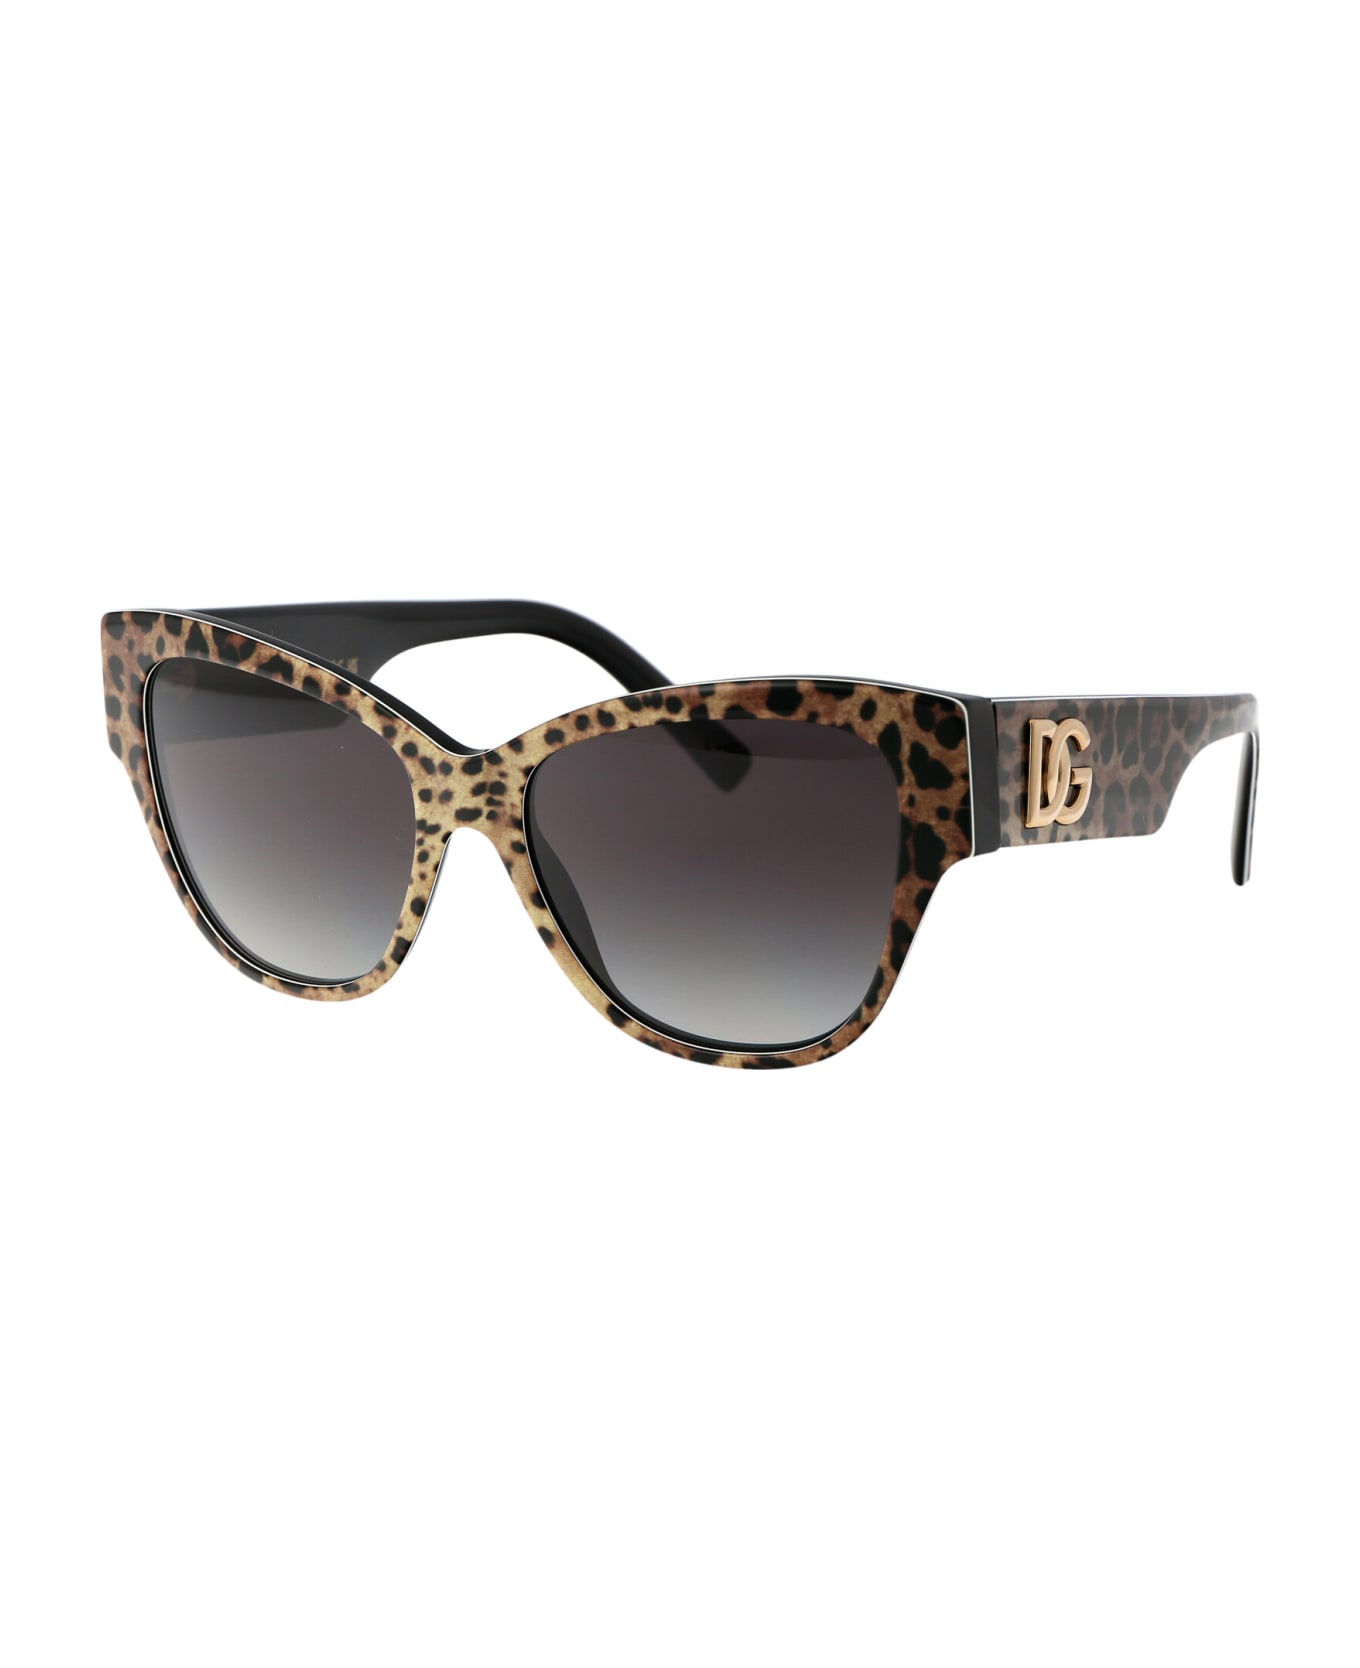 Dolce & Gabbana Eyewear 0dg4449 Sunglasses - 31638G Leo Brown On Black サングラス